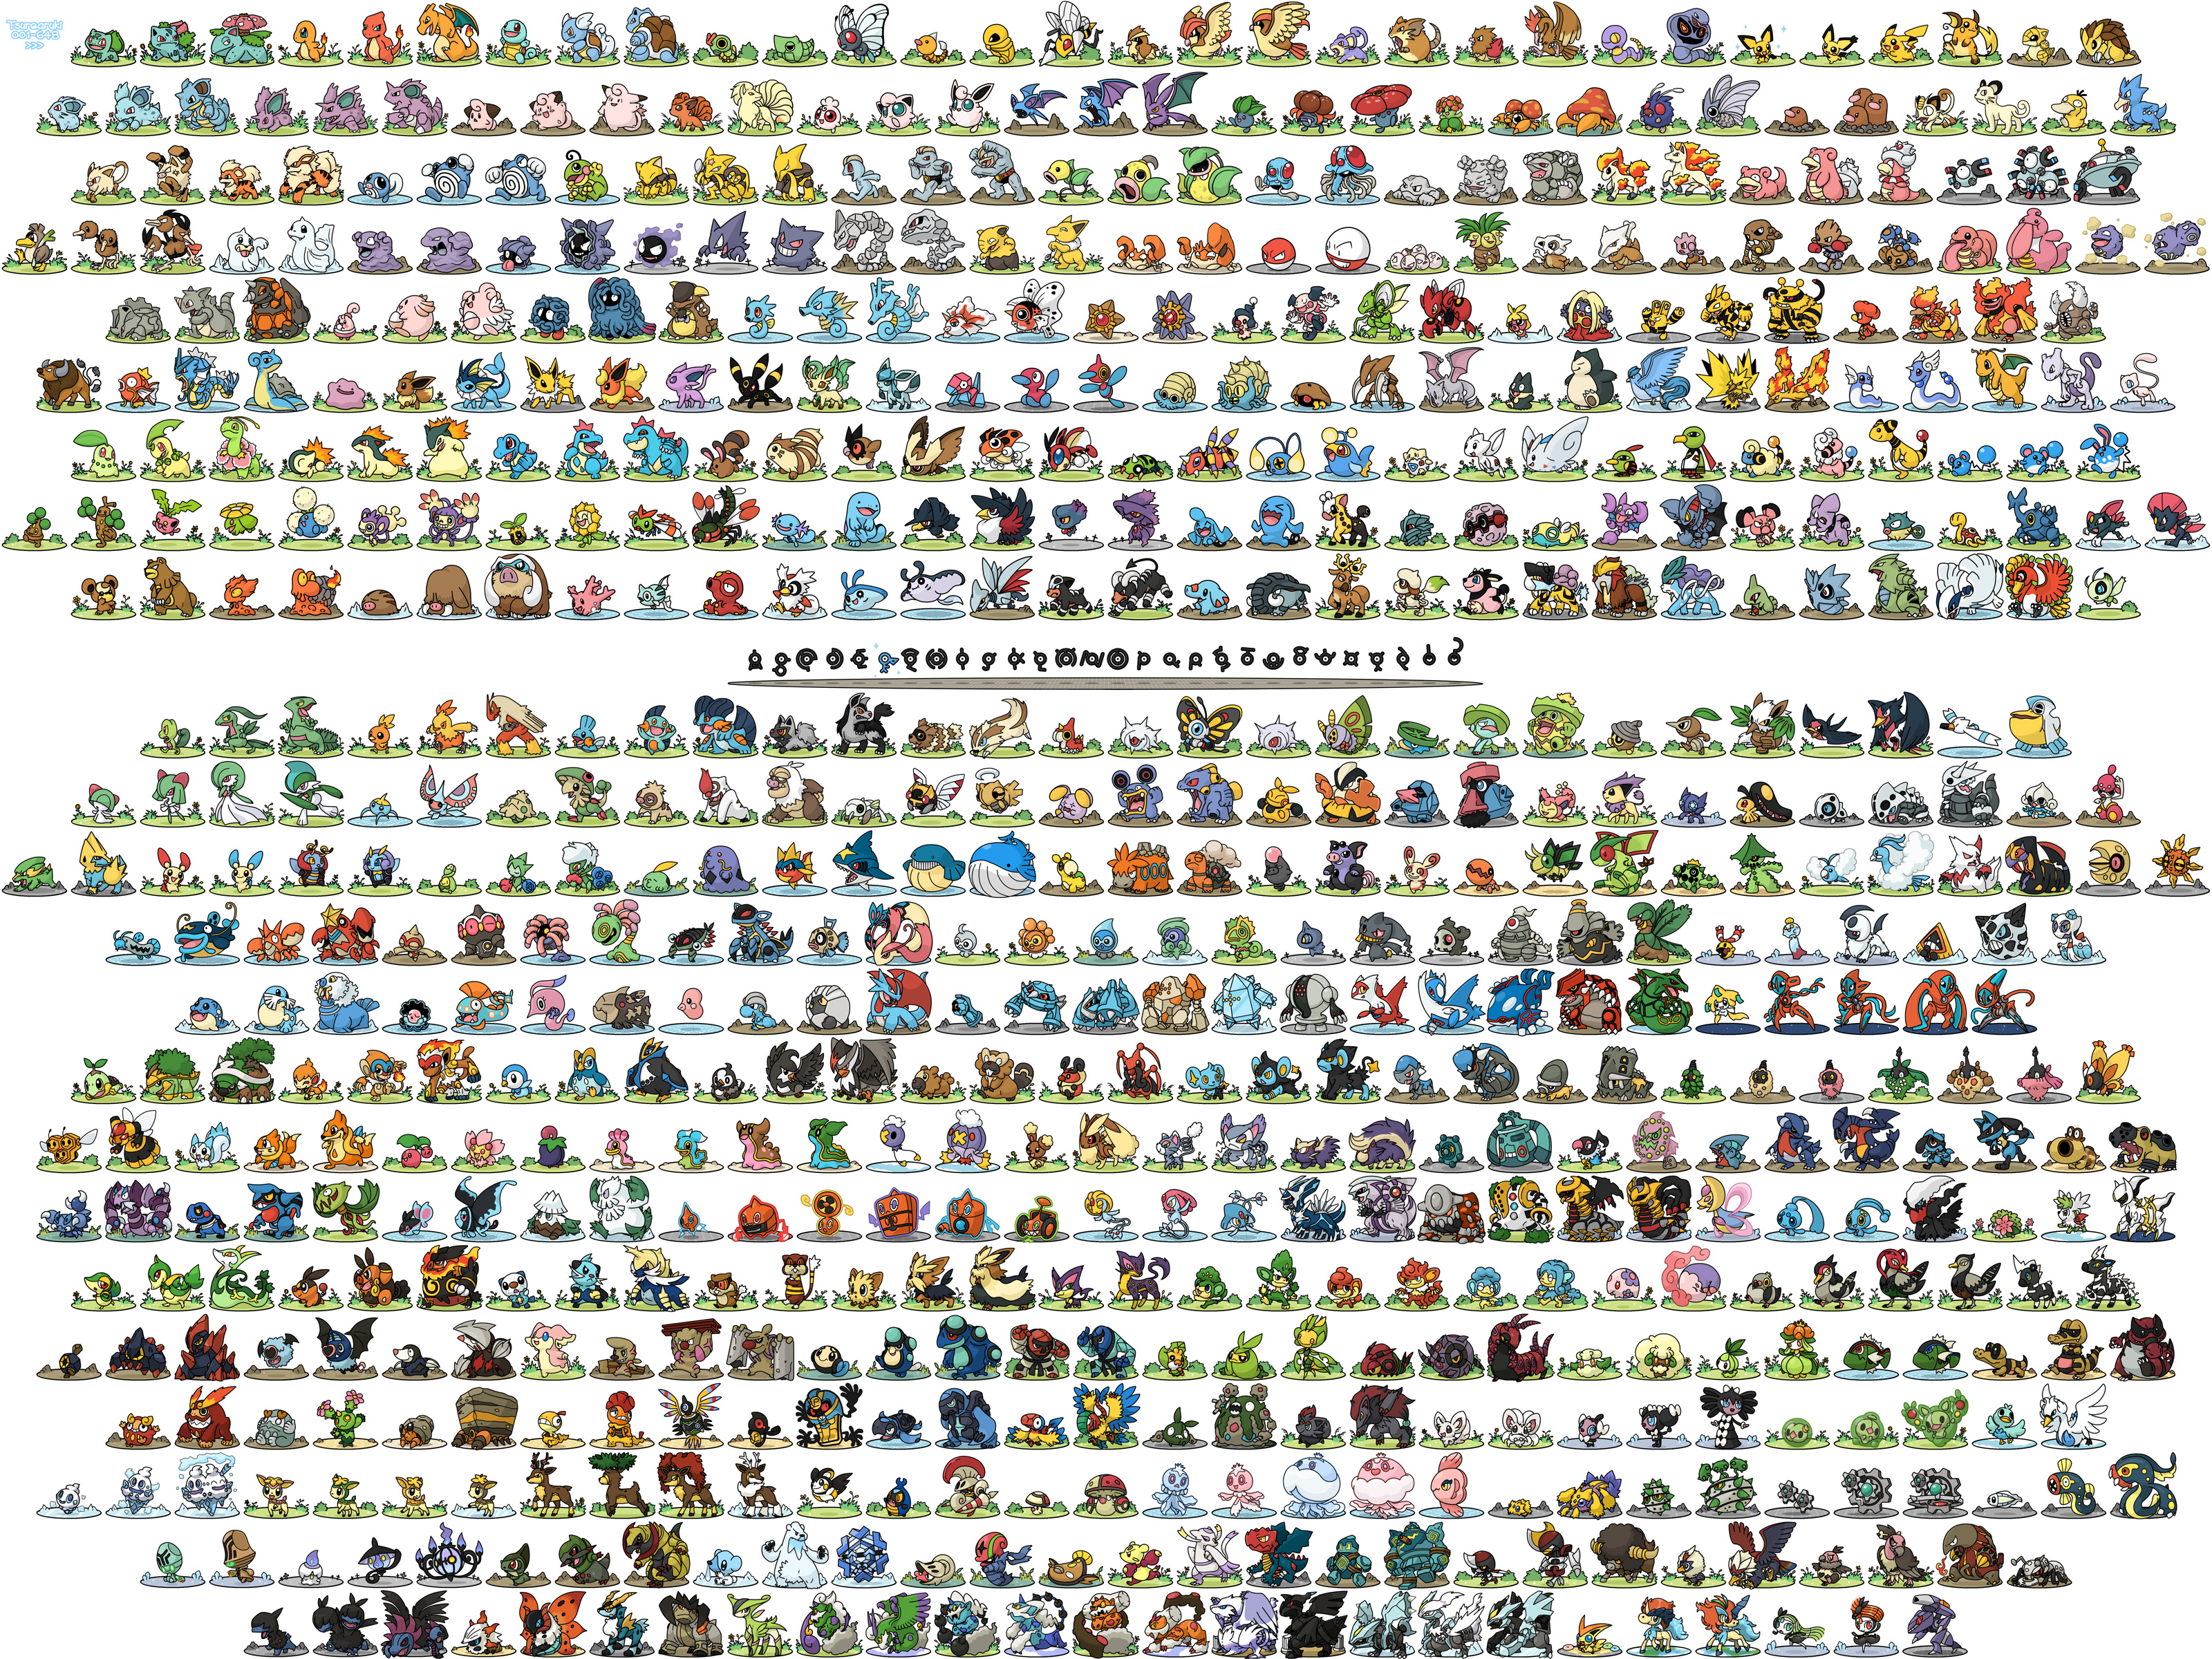 269380 Hintergrundbild herunterladen animes, pokémon, abomasnow (pokémon), abra (pokémon), absol (pokémon), accelgor (pokémon), aerodaktylus (pokémon), agron (pokémon), aipom (pokémon), alakazam (pokémon), alomomolá (pokémon), altaria (pokémon), amoonguss (pokémon), ampharos (pokémon), anorith (pokémon), arbok (pokémon), arkani (pokémon), arceus (pokémon), archen (pokémon), archäops (pokémon), ariados (pokémon), armaldo (pokémon), aron (pokémon), articuno (pokémon), audino (pokémon), axew (pokémon), azelf (pokémon), azumarill (pokémon), azurill (pokémon), bagon (pokémon), baltoy (pokémon), banette (pokémon), barboach (pokémon), basculin (pokémon), bastiodon (pokémon), lorbeer (pokémon), beartic (pokémon), schönfliege (pokémon), beedrill (pokémon), beeheyem (pokémon), beldum (pokémon), bellossom (pokémon), rosenkohl (pokémon), bibarel (pokémon), bidoof (pokémon), bisharp (pokémon), blastoise (pokémon), blaziken (pokémon), blissey (pokémon), blitzle (pokémon), boldore (pokémon), bonly (pokémon), bouffalant (pokémon), braviary (pokémon), breloom (pokémon), bronzong (pokémon), bronzer (pokémon), budew (pokémon), buizel (pokémon), bisasam (pokémon), bunear (pokémon), birma (pokémon), butterfrei (pokémon), cacnea (pokémon), kaktus (pokémon), camerupt (pokémon), carnivine (pokémon), carracosta (pokémon), carvanha (pokémon), kascoon (pokémon), castform (pokémon), raupe (pokémon), celebi (pokémon), kronleuchter (pokémon), chansey (pokémon), glurak (pokémon), glumanda (pokémon), charmeleon (pokémon), chatot (pokémon), cherrim (pokémon), cherubi (pokémon), chikorita (pokémon), chimchar (pokémon), chimecho (pokémon), chinchou (pokémon), chingling (pokémon), cinccino (pokémon), klemmel (pokémon), claydol (pokémon), clefable (pokémon), clefairy (pokémon), cleffa (pokémon), cloyster (pokémon), koballion (pokémon), cofagrigus (pokémon), combee (pokémon), combusken (pokémon), conkeldurr (pokémon), korphisch (pokémon), corsola (pokémon), cottonee (pokémon), cradly (pokémon), cranidos (pokémon), flusskrebs (pokémon), cresselia (pokémon), croagunk (pokémon), krobat (pokémon), croconaw (pokémon), crustle (pokémon), cubchoo (pokémon), kubon (pokémon), cyndaquil (pokémon), cyrogonal (pokémon), darkrai (pokémon), darmanitan (pokémon), darumaka (pokémon), hirsch (pokémon), deino (pokémon), delcatty (pokémon), delibird (pokémon), desoxys (pokémon), taugong (pokémon), dewott (pokémon), dialga (pokémon), diglett (pokémon), dito (pokémon), dodrio (pokémon), doduo (pokémon), donphan (pokémon), drachenluft (pokémon), dragonit (pokémon), drapion (pokémon), dratini (pokémon), driftblim (pokémon), driftlon (pokémon), drilbur (pokémon), drowzee (pokémon), druddigon (pokémon), entlein (pokémon), dugtrio (pokémon), dunsparce (pokémon), duosion (pokémon), durant (pokémon), dusclops (pokémon), dämmerfinsternis (pokémon), dämmerung (pokémon), staubox (pokémon), dwebble (pokémon), elekrik (pokémon), elektroross (pokémon), evoli (pokémon), ekans (pokémon), electabuzz (pokémon), elektrivir (pokémon), electrike (pokémon), elektrode (pokémon), elekid (pokémon), elgyem (pokémon), emboar (pokémon), emolga (pokémon), impoleon (pokémon), entei (pokémon), eskavalier (pokémon), espeon (pokémon), excadrill (pokémon), exeggcute (pokémon), exeggutor (pokémon), explodieren (pokémon), weit geholt (pokémon), furcht (pokémon), feebas (pokémon), feraligatr (pokémon), eisenkraut (pokémon), ferrothorn (pokémon), finneon (pokémon), flaffy (pokémon), leuchtfeuer (pokémon), floatzel (pokémon), flygon (pokémon), foongus (pokémon), festung (pokémon), fraktur (pokémon), schnörkel (pokémon), frostlass (pokémon), furret (pokémon), gabite (pokémon), galade (pokémon), garbodor (pokémon), knakrack (pokémon), guardevoir (pokémon), gastly (pokémon), gastrodon (pokémon), gavantula (pokémon), genesect (pokémon), gengar (pokémon), geodude (pokémon), gibel (pokémon), gigalith (pokémon), girafarig (pokémon), glaceon (pokémon), glalie (pokémon), glameow (pokémon), gligar (pokémon), gliskor (pokémon), düsternis (pokémon), golbat (pokémon), golden (pokémon), goldgans (pokémon), golem (pokémon), golett (pokémon), golurk (pokémon), gorebyss (pokémon), gotita (pokémon), gothitelle (pokémon), gothorita (pokémon), granbull (pokémon), steinmetz (pokémon), grimmer (pokémon), grotel (pokémon), groudon (pokémon), grovyle (pokémon), growlith (pokémon), grumpig (pokémon), gulpin (pokémon), gurdurr (pokémon), garados (pokémon), glück (pokémon), hariyama (pokémon), jäger (pokémon), haxorus (pokémon), heatmor (pokémon), heatran (pokémon), heracross (pokémon), herdier (pokémon), nilpferde (pokémon), hippodon (pokémon), hitmonchan (pokémon), hitmonlee (pokémon), hitmontop (pokémon), honchkrow (pokémon), huhuhuhn (pokémon), hoppip (pokémon), horsea (pokémon), hundom (pokémon), hundur (pokémon), ho oh (pokémon), huntail (pokémon), hydreigon (pokémon), hypno (pokémon), igglybuff (pokémon), erleuchten (pokémon), höllenaffe (pokémon), efeusaurier (pokémon), gallert (pokémon), pummeluff (pokémon), jirachi (pokémon), jolteon (pokémon), joltik (pokémon), jumpluff (pokémon), jynx (pokémon), kabuto (pokémon), kabutops (pokémon), kadabra (pokémon), kakuna (pokémon), karablast (pokémon), kecleon (pokémon), keldeo (pokémon), kingdra (pokémon), kingler (pokémon), kirlia (pokémon), klang (pokémon), klink (pokémon), klinklang (pokémon), köffing (pokémon), krabben (pokémon), kricket (pokémon), kriketune (pokémon), krokorok (pokémon), krookodile (pokémon), kyogre (pokémon), kyurem (pokémon), lairon (pokémon), lampent (pokémon), lanturn (pokémon), lapras (pokémon), larvesta (pokémon), larvitar (pokémon), latias (pokémon), latios (pokémon), leafeon (pokémon), leavanny (pokémon), ledian (pokémon), ledyba (pokémon), leckitung (pokémon), liepard (pokémon), liliep (pokémon), liligant (pokémon), liliput (pokémon), linone (pokémon), litwick (pokémon), lombre (pokémon), lopunny (pokémon), lotad (pokémon), lautrot (pokémon), lucario (pokémon), ludicolo (pokémon), lugia (pokémon), lumineon (pokémon), lunaton (pokémon), luvdisk (pokémon), luxio (pokémon), luxray (pokémon), machamp (pokémon), machoke (pokémon), machop (pokémon), magbi (pokémon), magcargo (pokémon), magikarp (pokémon), magmar (pokémon), magbrant (pokémon), magnemit (pokémon), magneton (pokémon), magnezone (pokémon), makuhita (pokémon), manaphy (pokémon), mandibuzz (pokémon), manectric (pokémon), mankey (pokémon), mantin (pokémon), mantyke (pokémon), maracatus (pokémon), mareep (pokémon), marill (pokémon), marowak (pokémon), sumpfturm (pokémon), maskerade (pokémon), mawile (pokémon), medicham (pokémon), meditit (pokémon), meganium (pokémon), meloetta (pokémon), meowth (pokémon), mesprit (pokémon), metagross (pokémon), metang (pokémon), metapod (pokémon), mew (pokémon), mewtu (pokémon), mienfoo (pokémon), mienshao (pokémon), mächtige (pokémon), milotic (pokémon), miltank (pokémon), mime jr (pokémon), minccino (pokémon), minun (pokémon), misdreavus (pokémon), mismagius (pokémon), moltres (pokémon), monferno (pokémon), mothim (pokémon), herr mime (pokémon), schlammkip (pokémon), muk (pokémon), munchlax (pokémon), munna (pokémon), murkrow (pokémon), musharna (pokémon), natu (pokémon), nidoking (pokémon), nidoqueen (pokémon), nidoran (pokémon), nidorina (pokémon), nidorino (pokémon), nincada (pokémon), ninetales (pokémon), ninjask (pokémon), nachteule (pokémon), nasenpass (pokémon), numel (pokémon), nuzblatt (pokémon), oktillerie (pokémon), seltsam (pokémon), omanyte (pokémon), omastar (pokémon), onix (pokémon), oscarott (pokémon), pachirisu (pokémon), palkia (pokémon), palpitoad (pokémon), panpour (pokémon), pansage (pokémon), pansear (pokémon), paras (pokémon), parasekt (pokémon), patrat (pokémon), bauer (pokémon), pelipp (pokémon), persisch (pokémon), petilil (pokémon), phanpy (pokémon), phione (pokémon), pichu (pokémon), pidgeot (pokémon), pidgeotto (pokémon), pidgey (pokémon), pidove (pokémon), pignit (pokémon), pikachu, piloswine (pokémon), pineco (pokémon), pinsir (pokémon), piplup (pokémon), plusle (pokémon), politoed (pokémon), polwag (pokémon), poliwirbel (pokémon), polyzorn (pokémon), ponita (pokémon), poochyena (pokémon), porygon (pokémon), porygon 2 (pokémon), porygon z (pokémon), primeape (pokémon), prinplup (pokémon), probopass (pokémon), psyduck (pokémon), pupitar (pokémon), purrloin (pokémon), purugly (pokémon), quagsire (pokémon), quilava (pokémon), qwilfish (pokémon), raichu (pokémon), raikou (pokémon), ratten (pokémon), ramardos (pokémon), rapidash (pokémon), rattikarl (pokémon), ratta (pokémon), rayquaza (pokémon), regice (pokémon), regigigas (pokémon), regirock (pokémon), registel (pokémon), relicanth (pokémon), remoraid (pokémon), reshiram (pokémon), reuniclus (pokémon), rydon (pokémon), rihorn (pokémon), riolu (pokémon), roggenrola (pokémon), roselia (pokémon), roserade (pokémon), rotom (pokémon), rüsche (pokémon), zobelauge (pokémon), salamence (pokémon), samurott (pokémon), sandil (pokémon), sandan (pokémon), sandhieb (pokémon), säge (pokémon), sägebock (pokémon), gewöhnlich (pokémon), scheror (pokémon), skolipede (pokémon), scrafty (pokémon), scraggy (pokémon), scyther (pokémon), seadra (pokémon), seeking (pokémon), sealeo (pokémon), seedot (pokémon), seele (pokémon), seismitoade (pokémon), sentret (pokémon), serperior (pokémon), servine (pokémon), seviper (pokémon), sewaddle (pokémon), sharpedo (pokémon), shaymin (pokémon), shedinja (pokémon), shelgon (pokémon), sheller (pokémon), shellos (pokémon), helm (pokémon), schildon (pokémon), shiftry (pokémon), shinx (pokémon), pilzartig (pokémon), shuckle (pokémon), shuppet (pokémon), sigilif (pokémon), silcoon (pokémon), simipour (pokémon), simisage (pokémon), simisear (pokémon), skarmory (pokémon), skiploom (pokémon), skitty (pokémon), skorupi (pokémon), skuntank (pokémon), töten (pokémon), slakoth (pokémon), slowbro (pokémon), langsam (pokémon), slowpoke (pokémon), slugma (pokémon), schmiere (pokémon), schmuskum (pokémon), sniesel (pokémon), schnief (pokémon), relaxo (pokémon), schnauben (pokémon), schnover (pokémon), snubbull (pokémon), solosis (pokémon), solrock (pokémon), speer (pokémon), speal (pokémon), spinarak (pokémon), spinda (pokémon), spiritomb (pokémon), spoink (pokémon), schiggy (pokémon), stantler (pokémon), sternaptor (pokémon), staravia (pokémon), starly (pokémon), starmie (pokémon), starju (pokémon), steelix (pokémon), starkland (pokémon), stunfisk (pokémon), stunky (pokémon), sudowoodo (pokémon), suicune (pokémon), sonnenblume (pokémon), sonnenkern (pokémon), surkit (pokémon), swablu (pokémon), swadloon (pokémon), swalot (pokémon), sumpf (pokémon), swanna (pokémon), schwalbe (pokémon), swinub (pokémon), swoobat (pokémon), schweif (pokémon), tangela (pokémon), tangwachstum (pokémon), stier (pokémon), teddiursa (pokémon), tentacool (pokémon), tentacruel (pokémon), tepig (pokémon), terrakium (pokémon), throh (pokémon), timburr (pokémon), tirtuuga (pokémon), togekiss (pokémon), togepi (pokémon), togetic (pokémon), fackel (pokémon), torkoal (pokémon), torterra (pokémon), totodile (pokémon), giftquak (pokémon), ruhe (pokémon), trapez (pokémon), baumko (pokémon), tropius (pokémon), trubbisch (pokémon), schildkröte (pokémon), tympole (pokémon), tynamo (pokémon), typhlosion (pokémon), tyranitar (pokémon), tyrogue (pokémon), umbreon (pokémon), unfezant (pokémon), unbekannt (pokémon), ursaring (pokémon), uxie (pokémon), vanille (pokémon), vanillit (pokémon), vaporeon (pokémon), venipede (pokémon), giftmotte (pokémon), venonat (pokémon), venusaurier (pokémon), vespiquen (pokémon), vibrava (pokémon), victini (pokémon), victreebel (pokémon), vigoroth (pokémon), vileplume (pokémon), virion (pokémon), volbeat (pokémon), volcarona (pokémon), voltorb (pokémon), vullaby (pokémon), vulpix (pokémon), wailmer (pokémon), wailord (pokémon), walrein (pokémon), warschildkröte (pokémon), watchog (pokémon), weavile (pokémon), wedel (pokémon), trauerglocke (pokémon), weezing (pokémon), whimsicott (pokémon), wirbelfüßler (pokémon), whisky (pokémon), whismur (pokémon), knuddeluff (pokémon), wingull (pokémon), wobbuffet (pokémon), woobat (pokémon), wooper (pokémon), wurmdame (pokémon), wurmpel (pokémon), wynaut (pokémon), xatu (pokémon), yamask (pokémon), yanma (pokémon), zangoose (pokémon), zapdos (pokémon), zebstrika (pokémon), zekrom (pokémon), zickzack (pokémon), zorroark (pokémon), zorua (pokémon), zubat (pokémon), zweilos (pokémon) - Bildschirmschoner und Bilder kostenlos